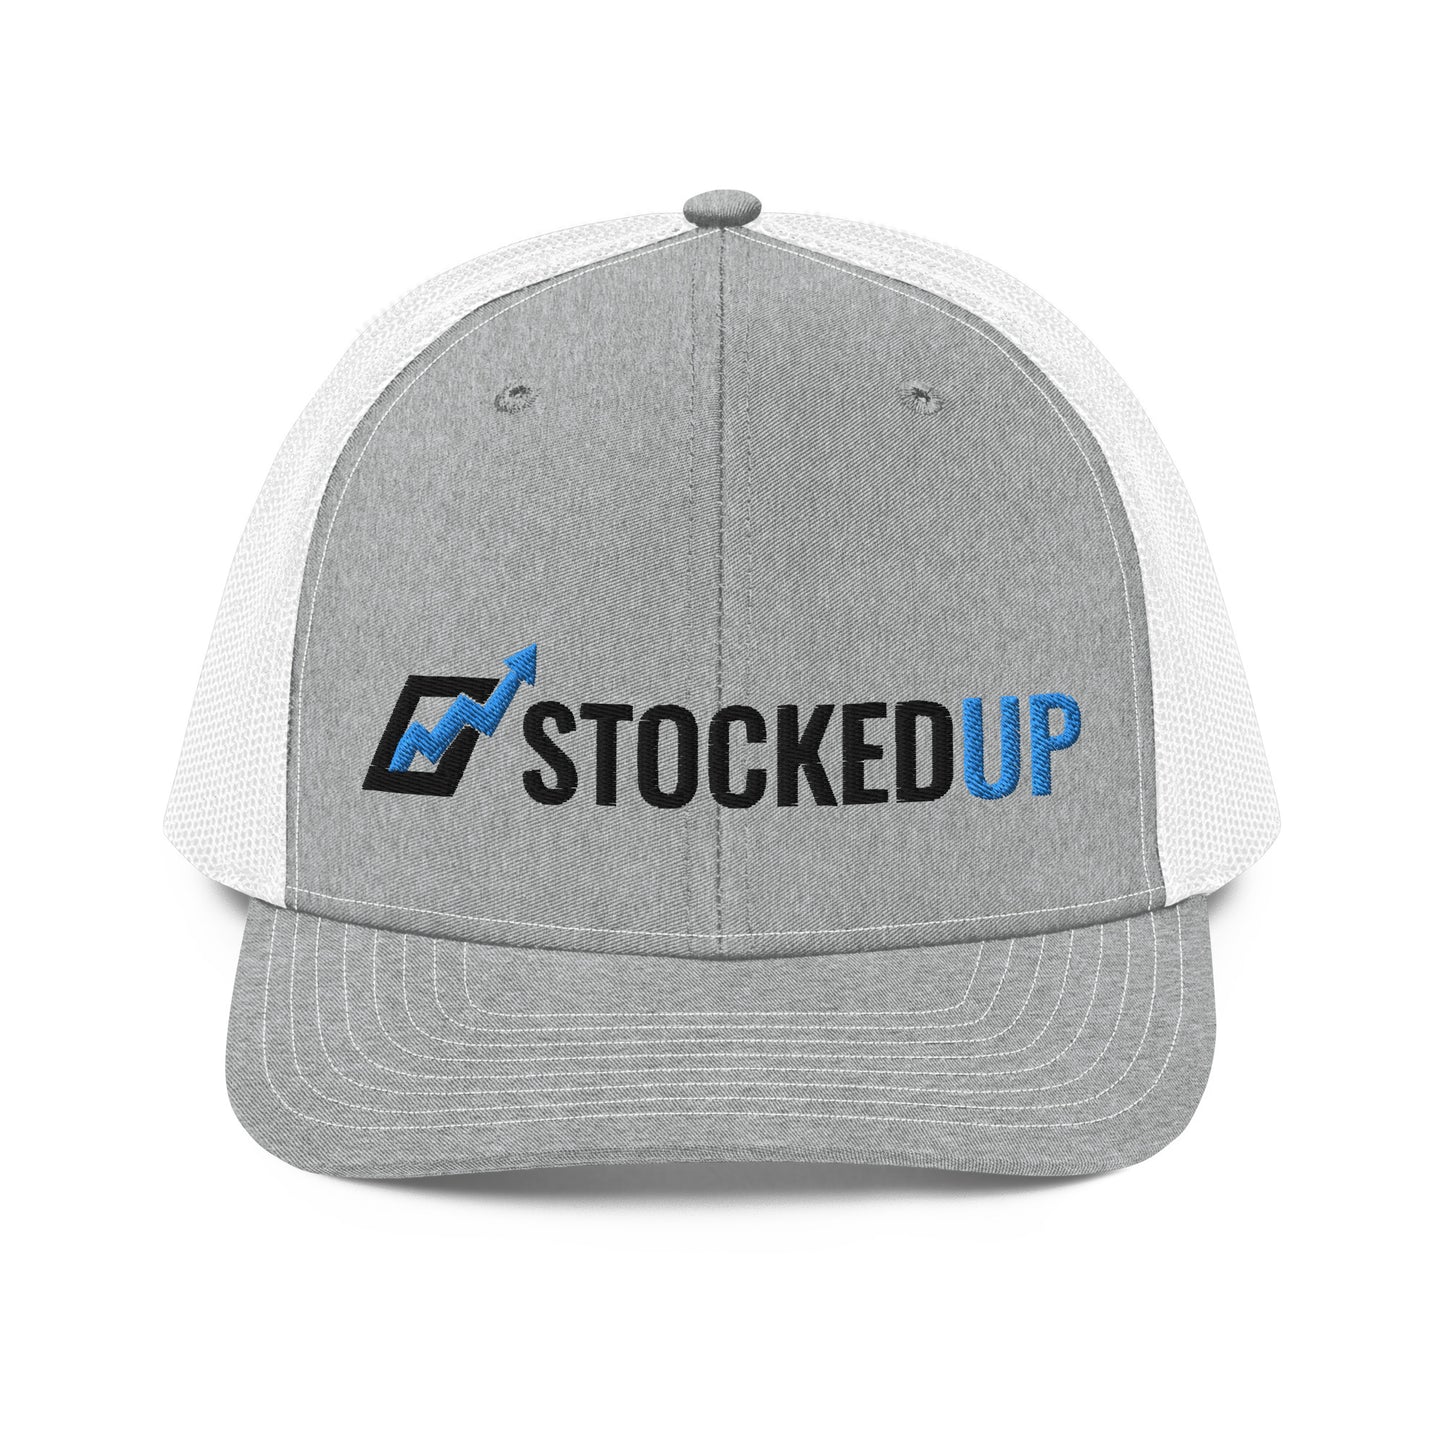 StockedUp Trucker Snapback (Grey/White)